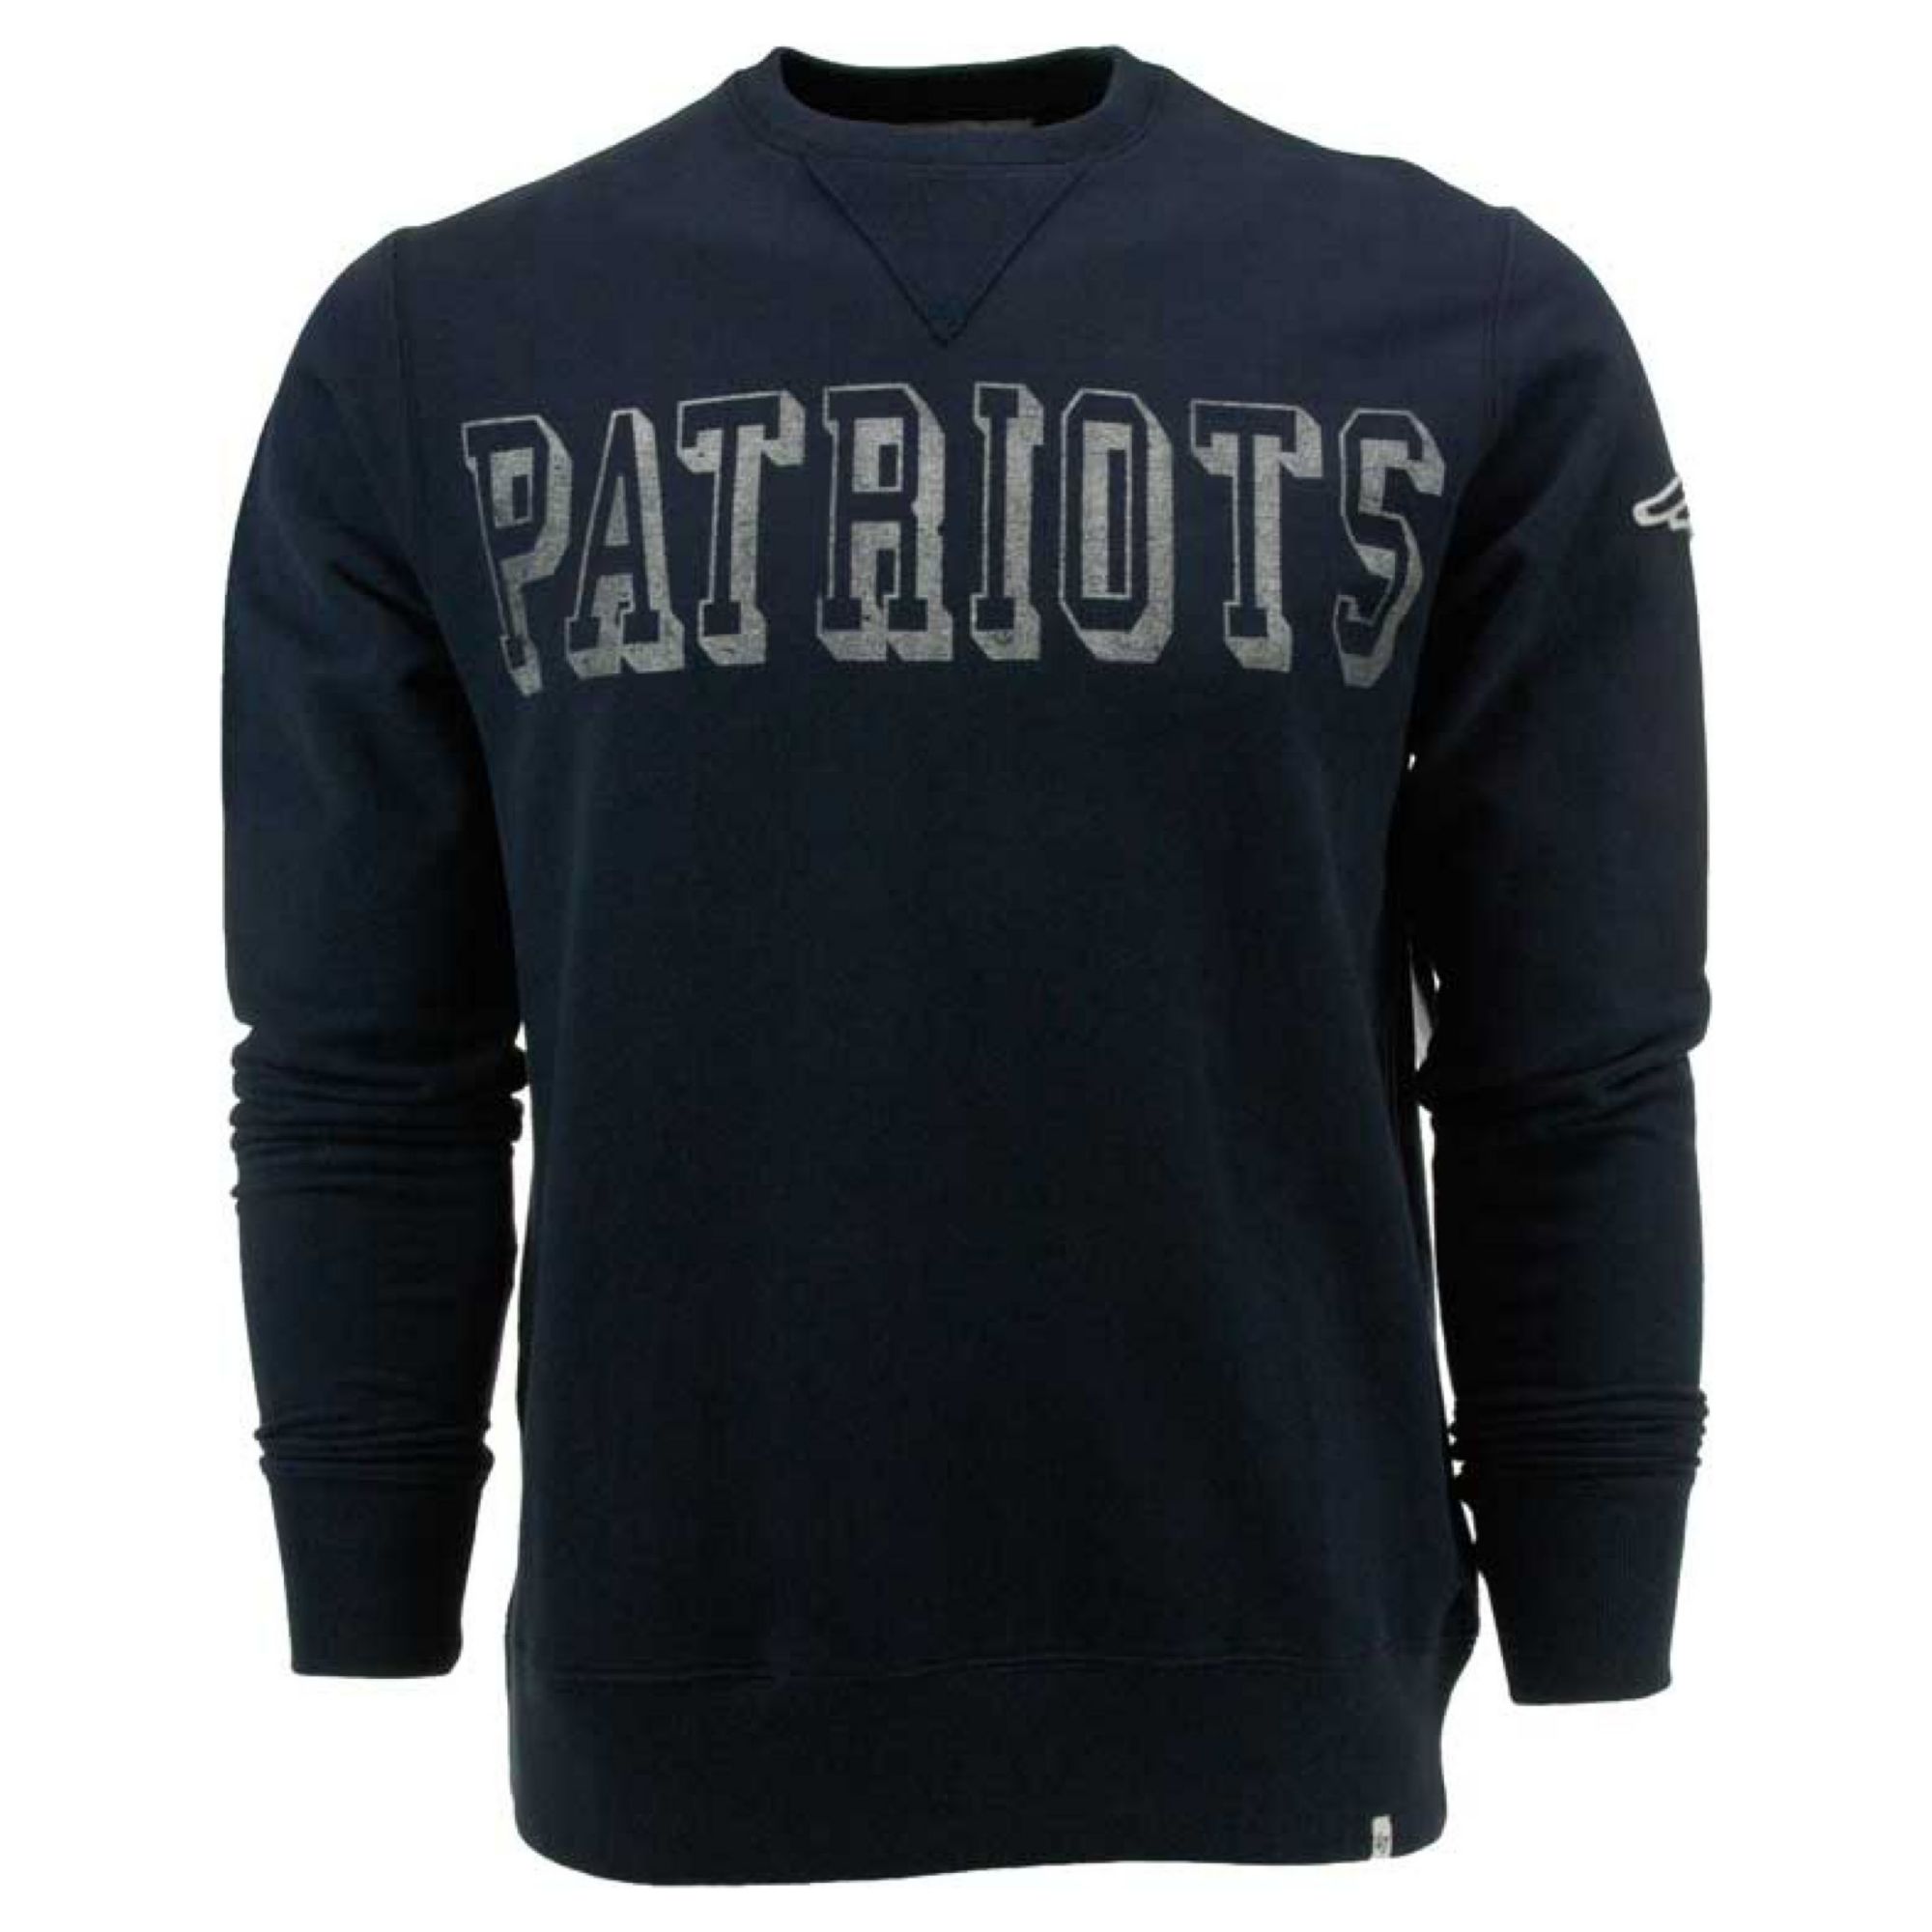 Lyst - 47 brand New England Patriots Crew Sweatshirt in Blue for Men